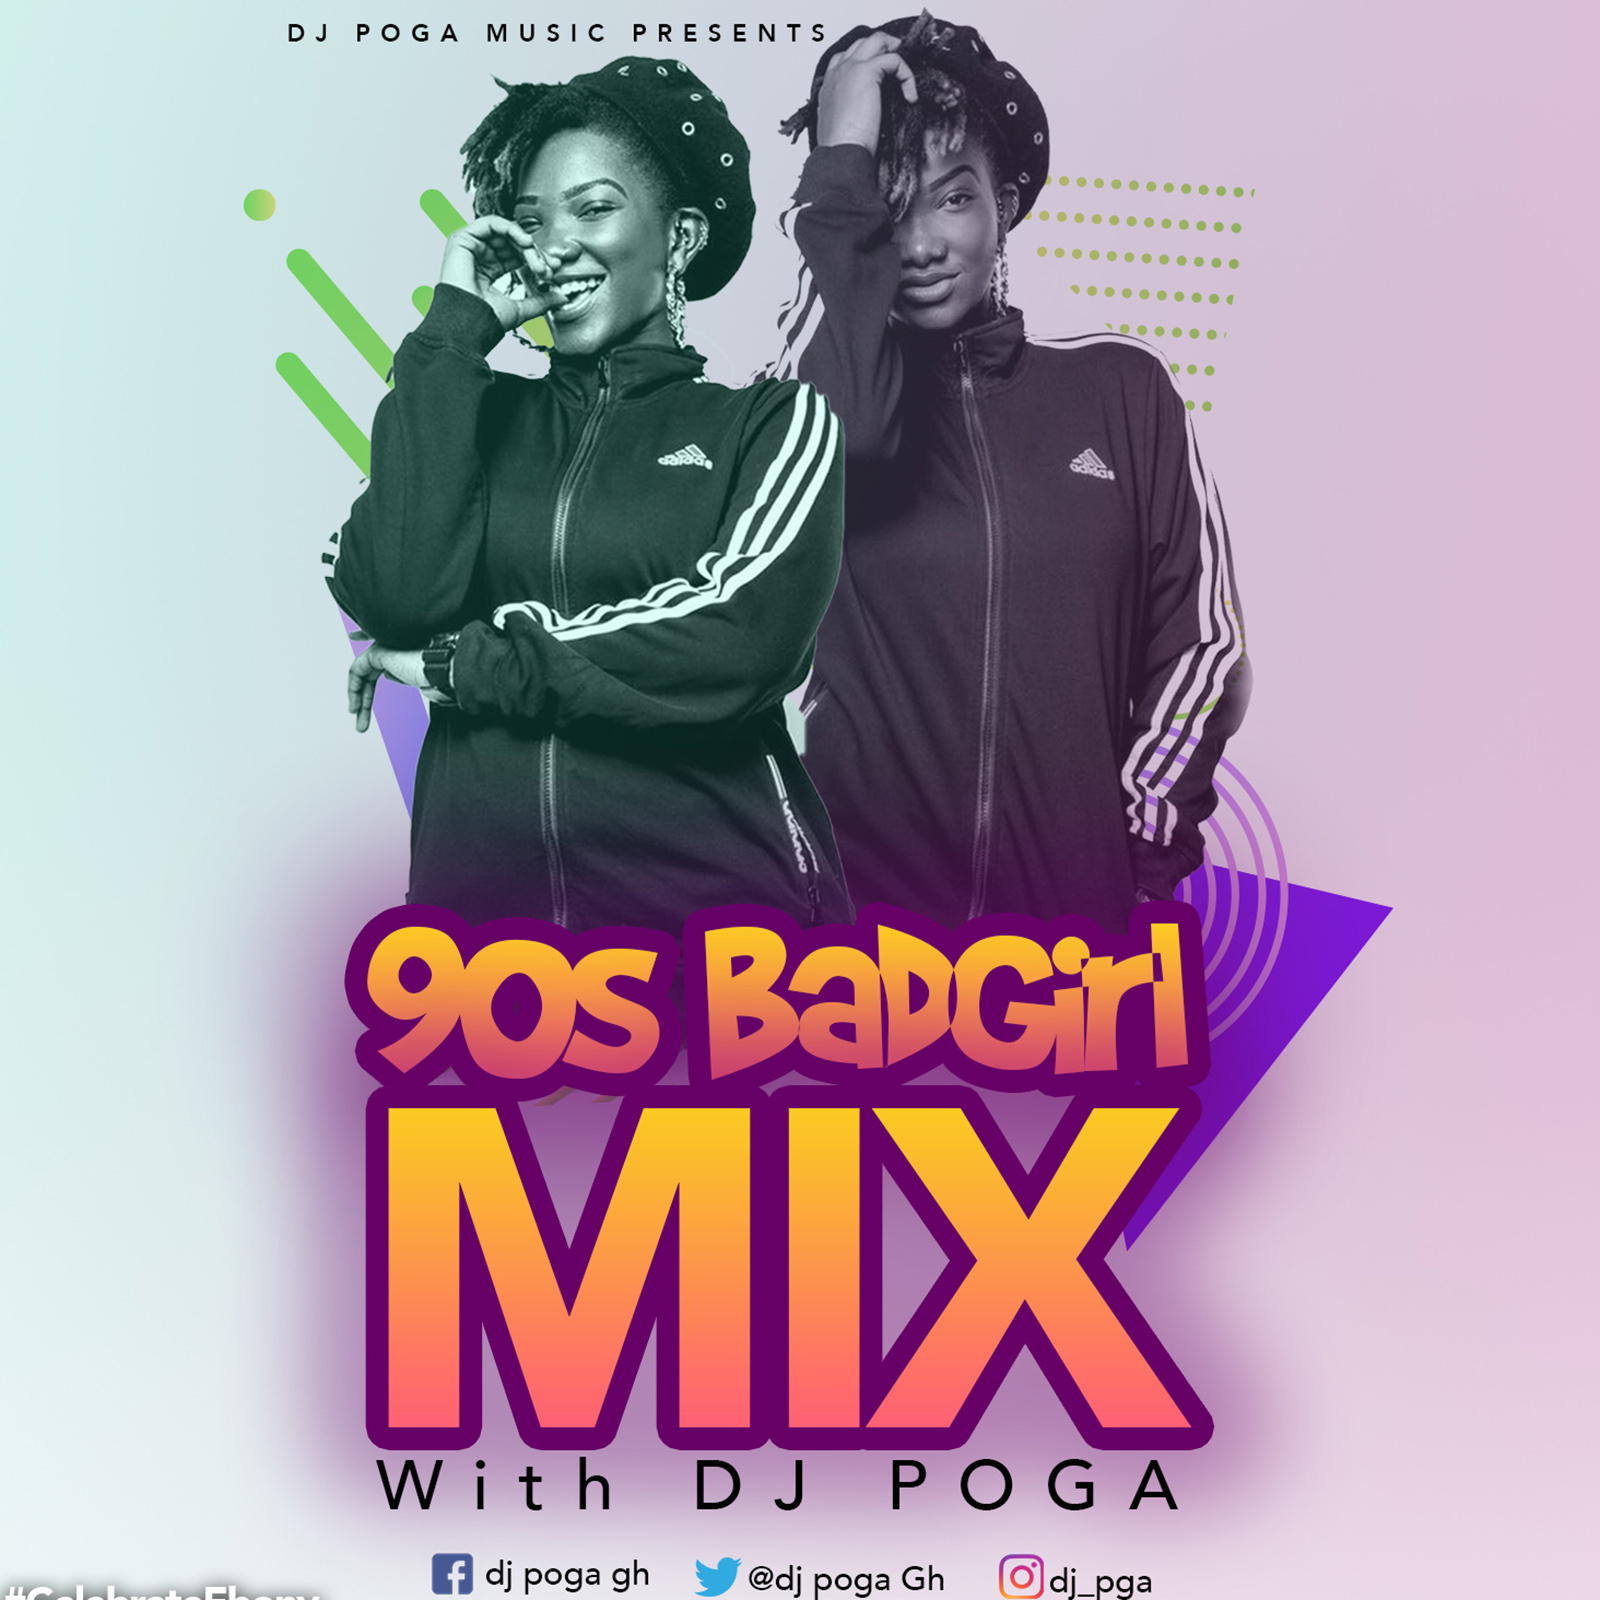 90s BadGal Mix by DJ Poga